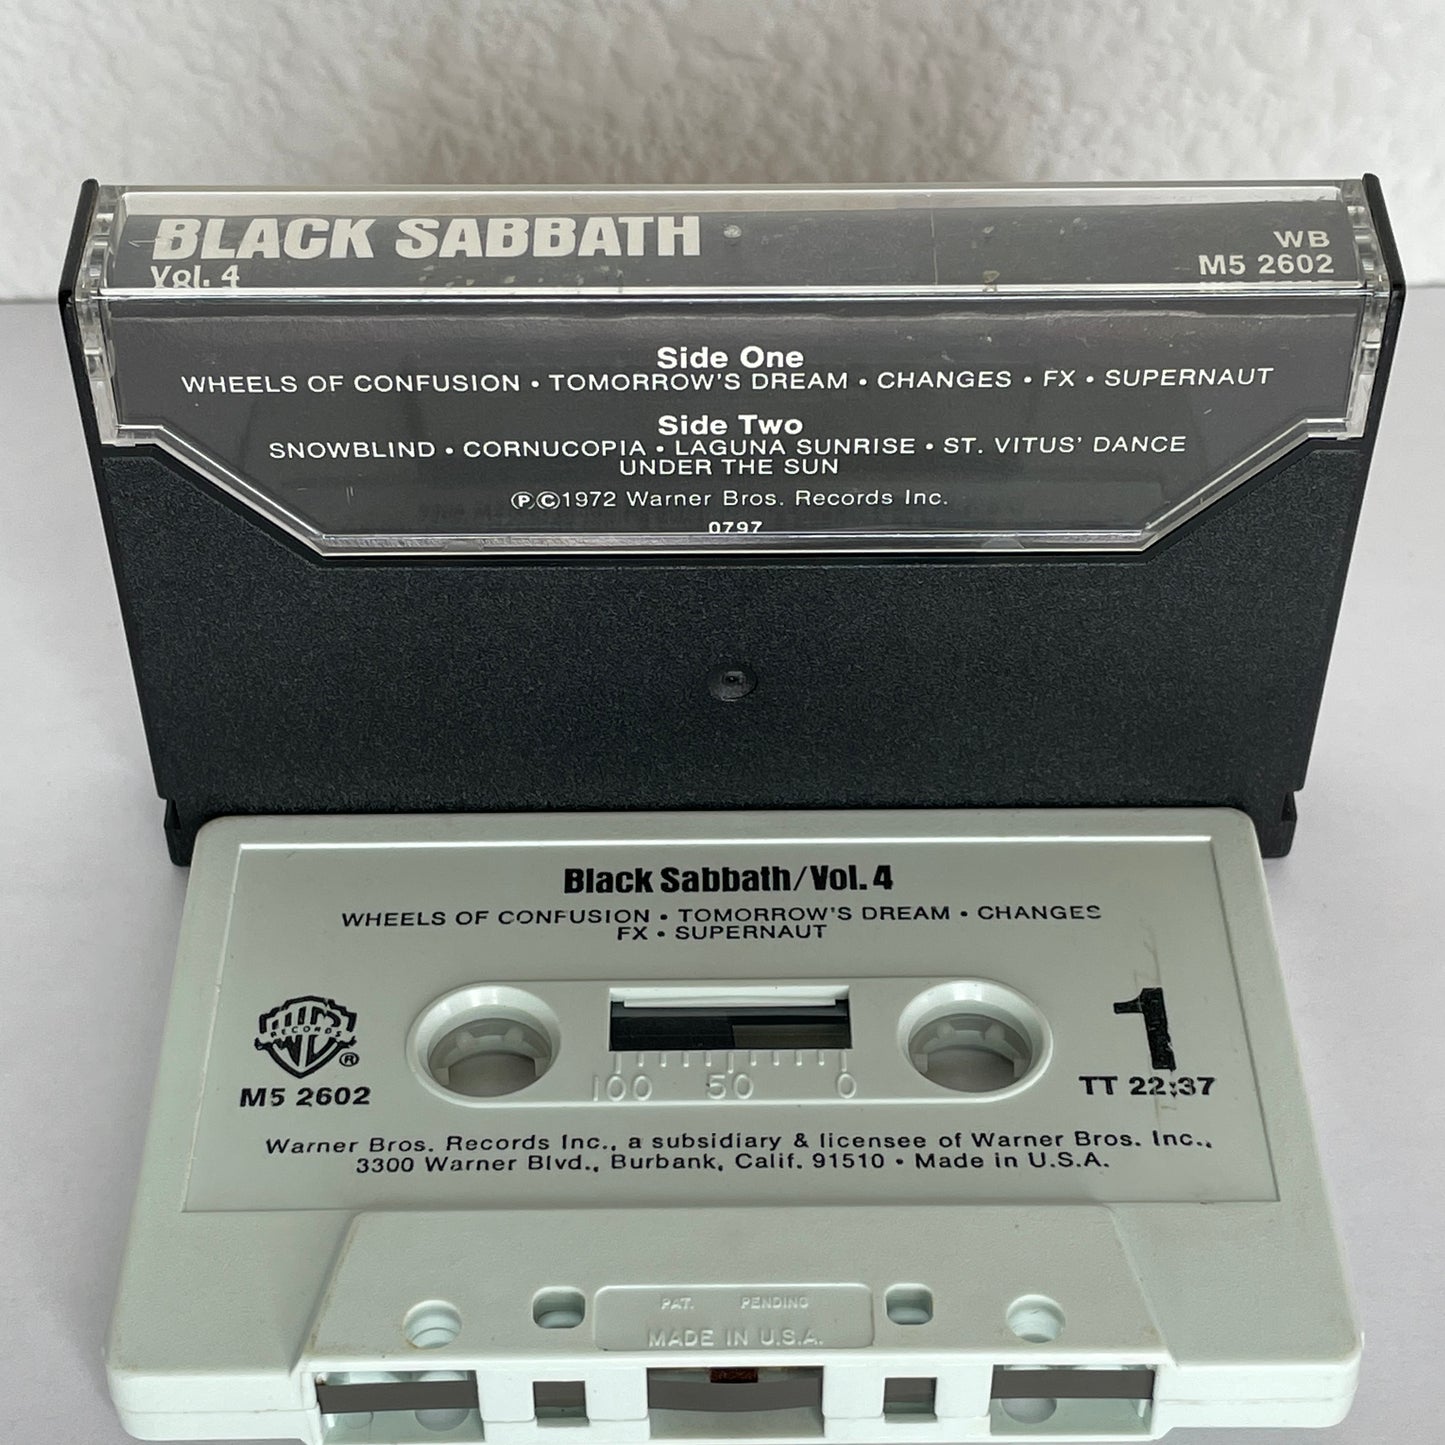 Black Sabbath - Vol. 4 original cassette tape